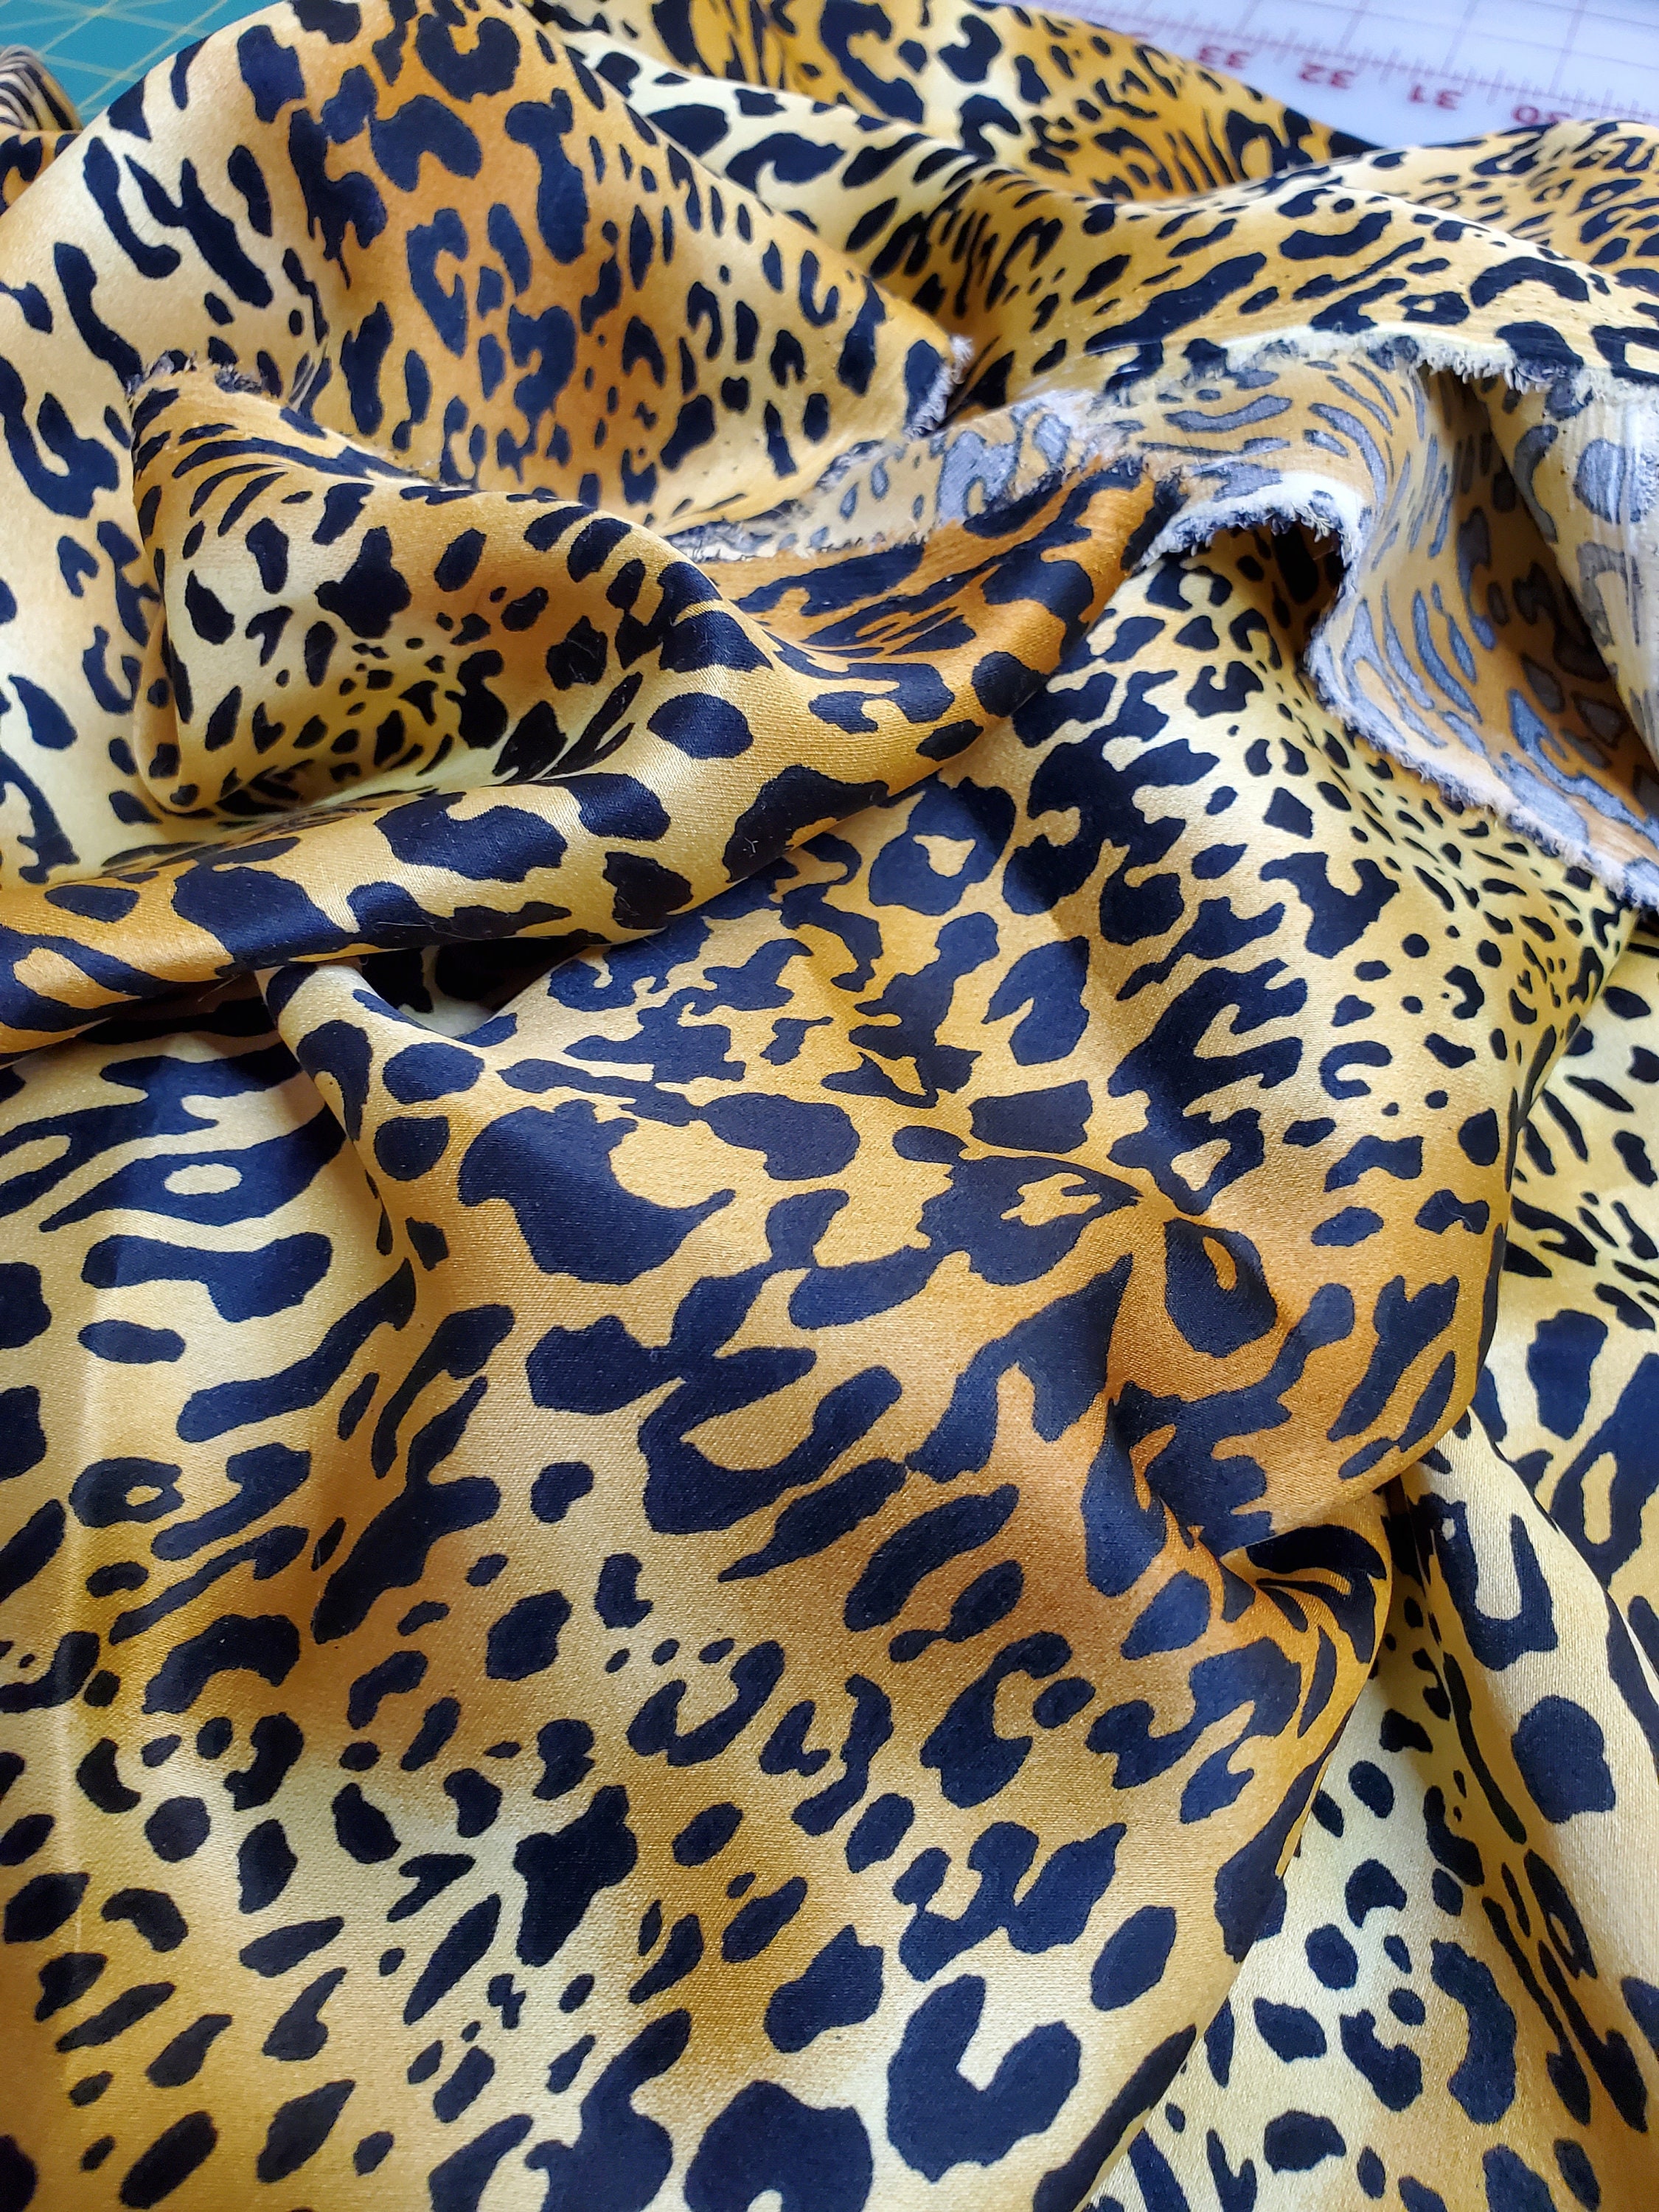 Cheetah Animal Print Charmeuse Satin Fabric Soft Hand Wild | Etsy